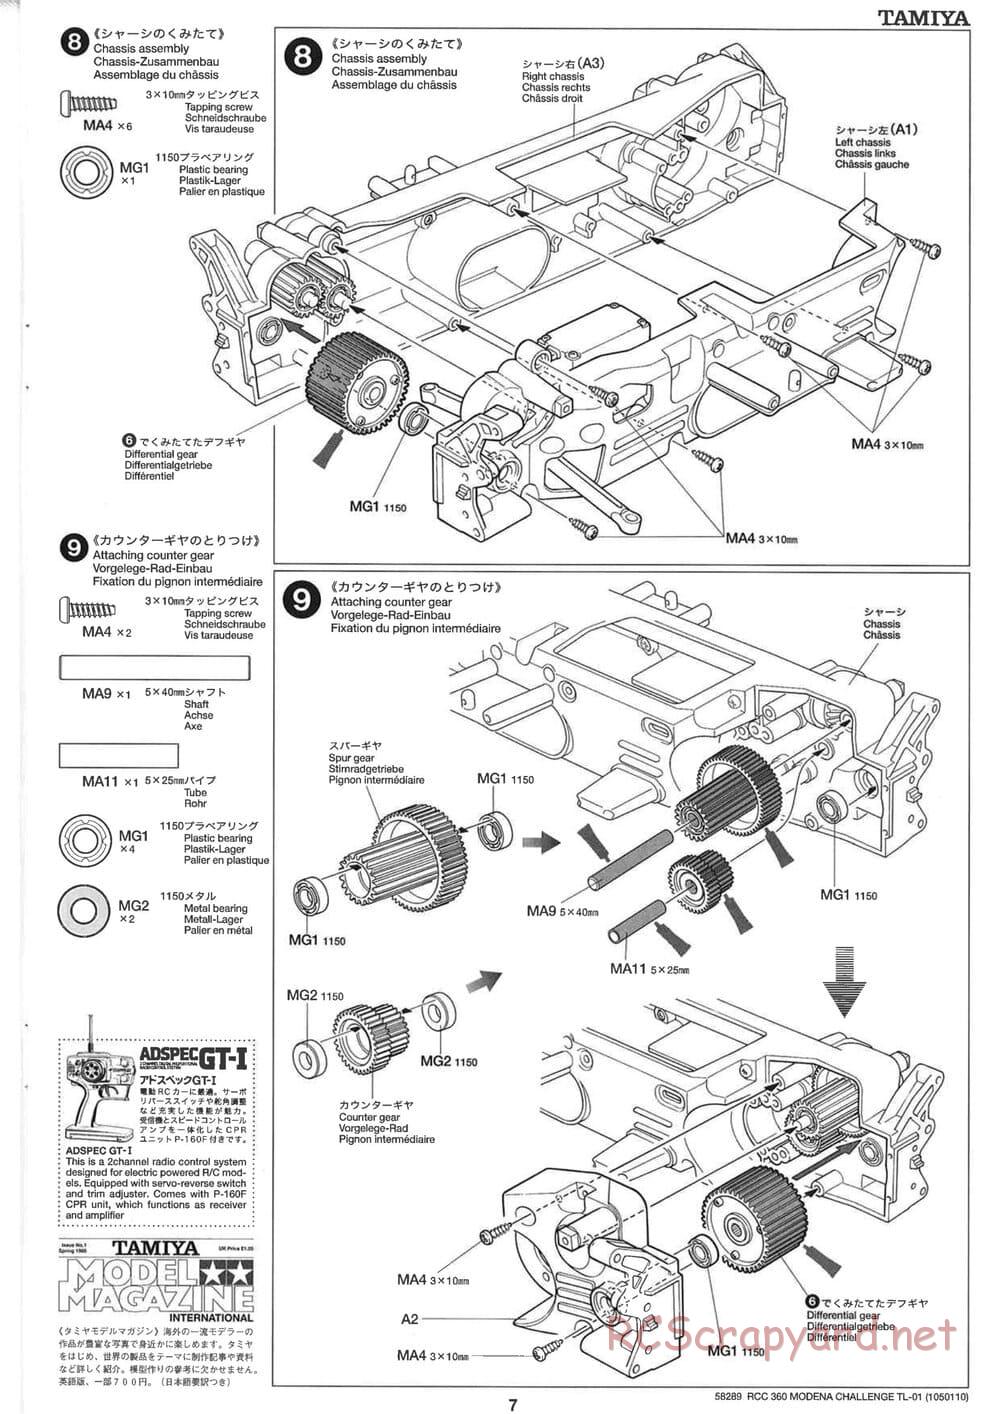 Tamiya - Ferrari 360 Modena Challenge - TL-01 Chassis - Manual - Page 7